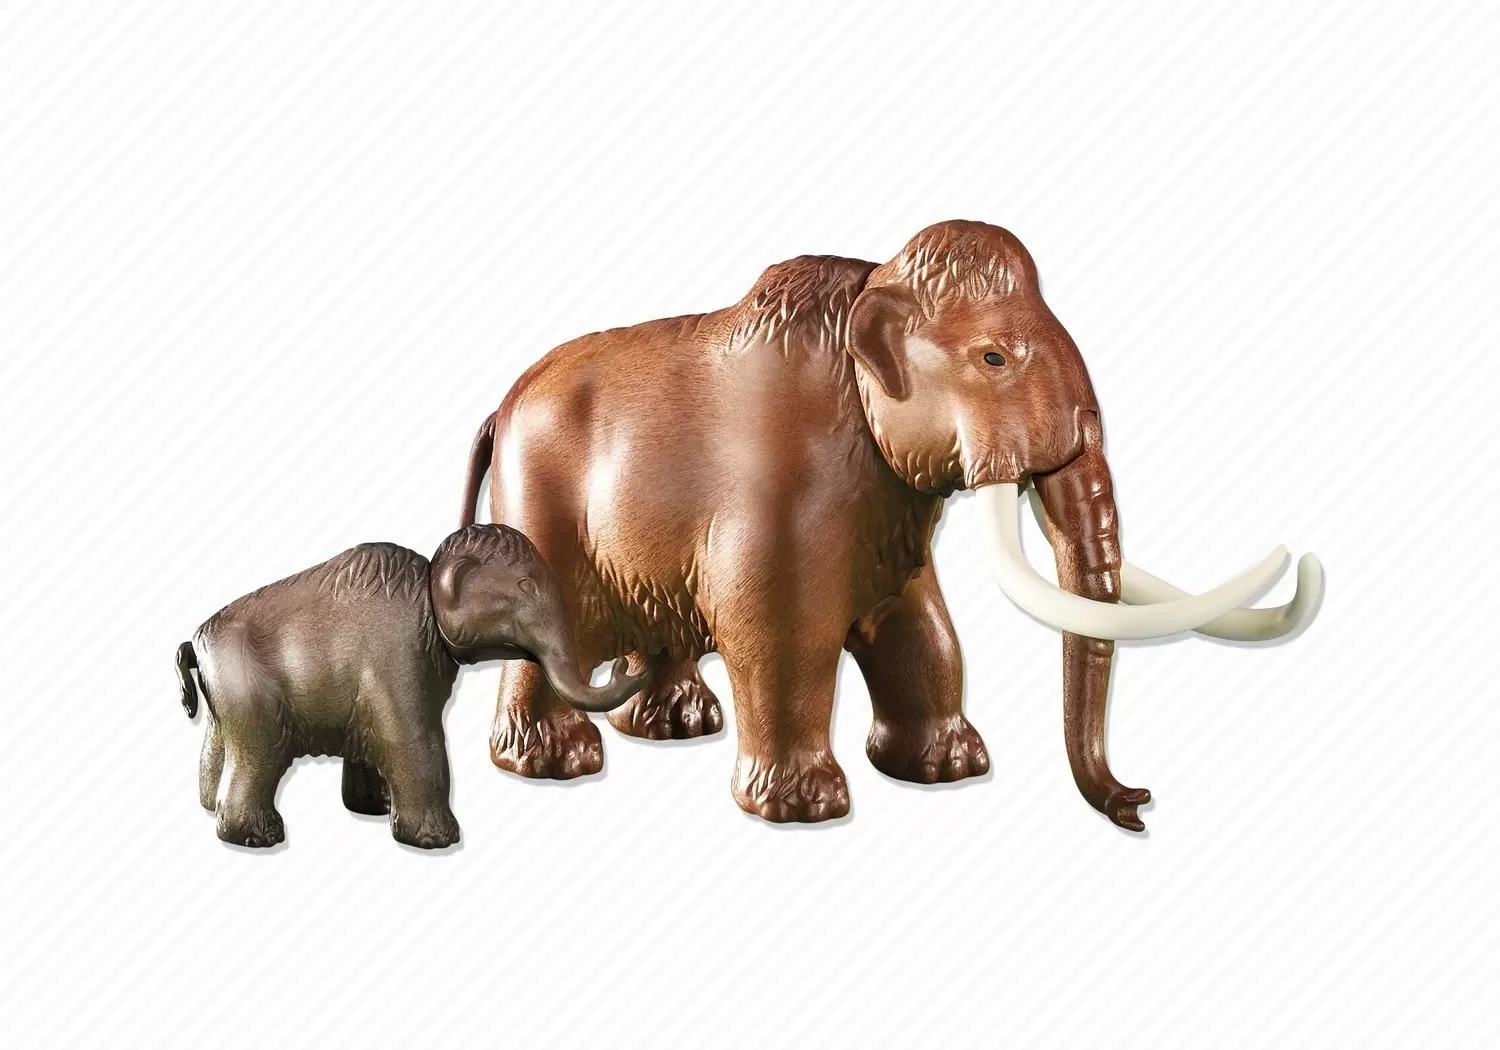 Playmobil Prehostoric - Mammoth with calf